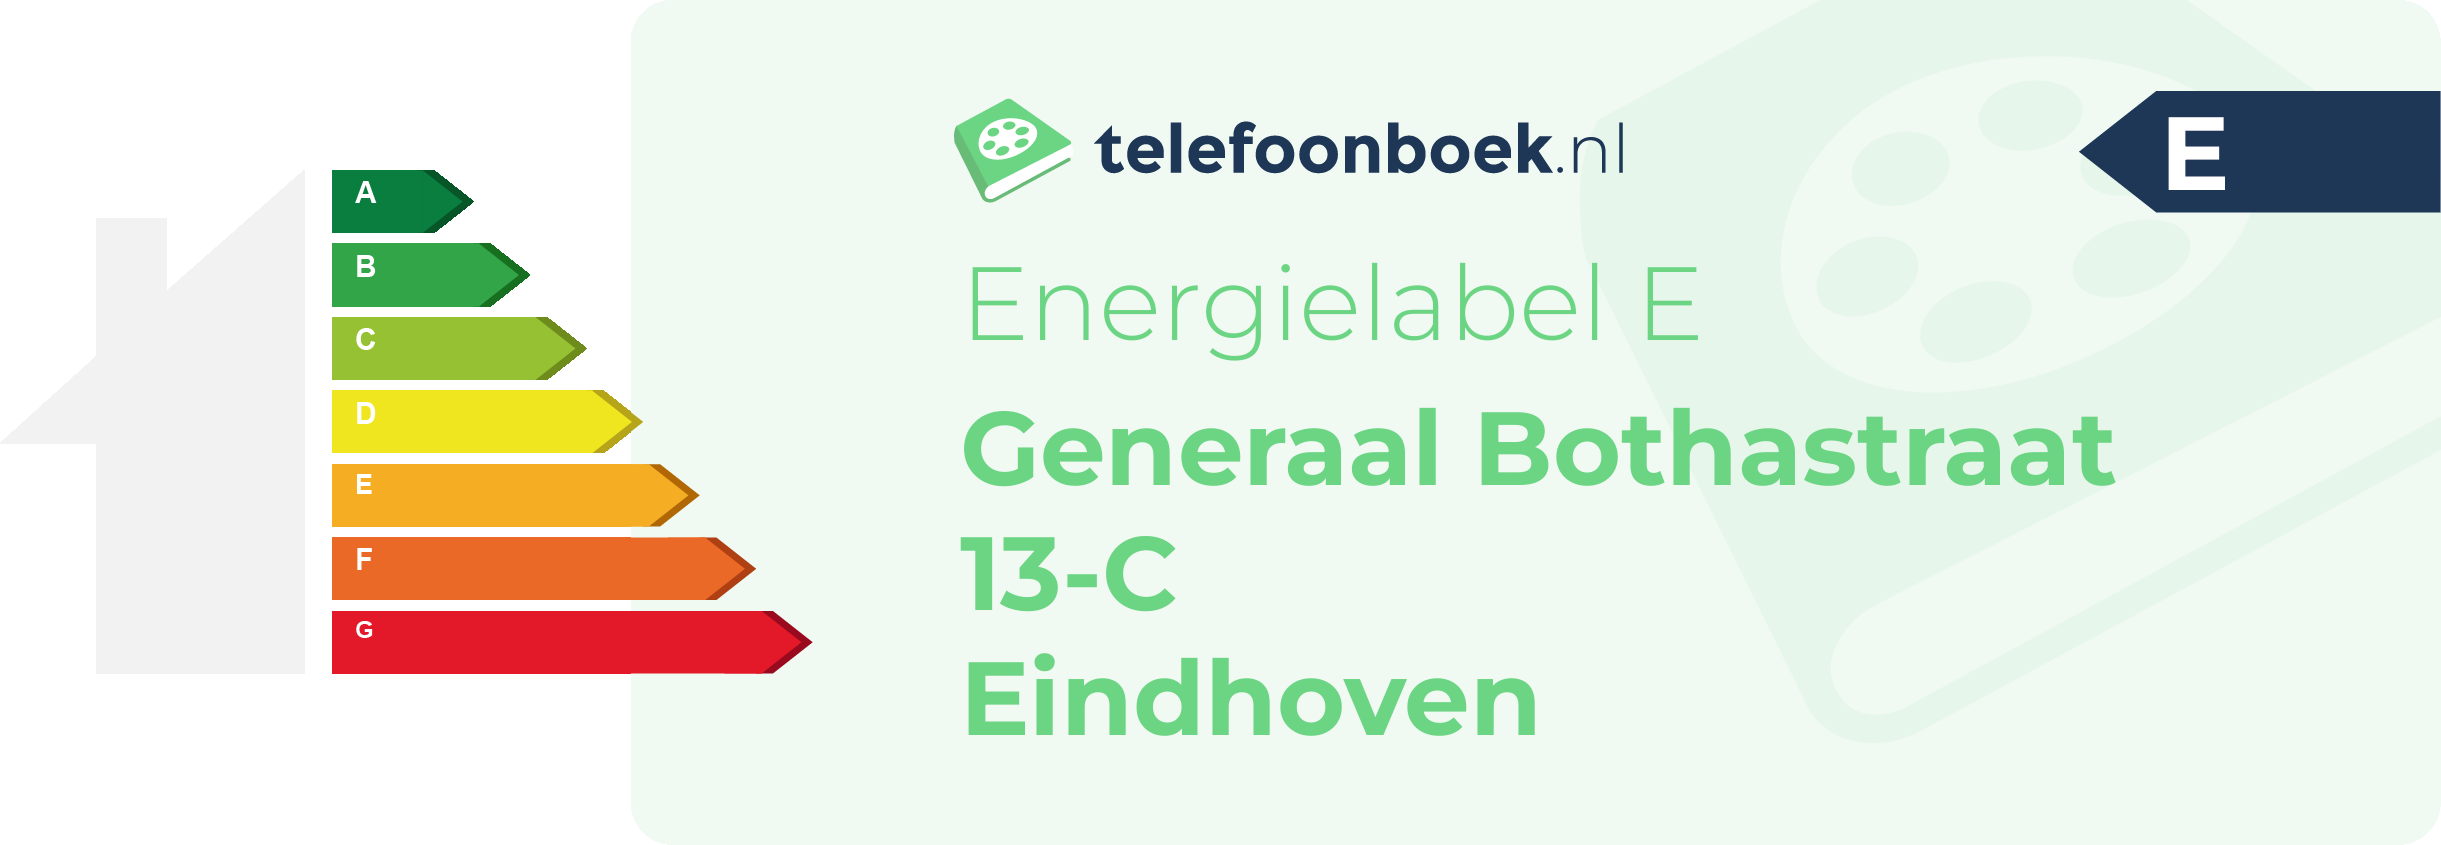 Energielabel Generaal Bothastraat 13-C Eindhoven